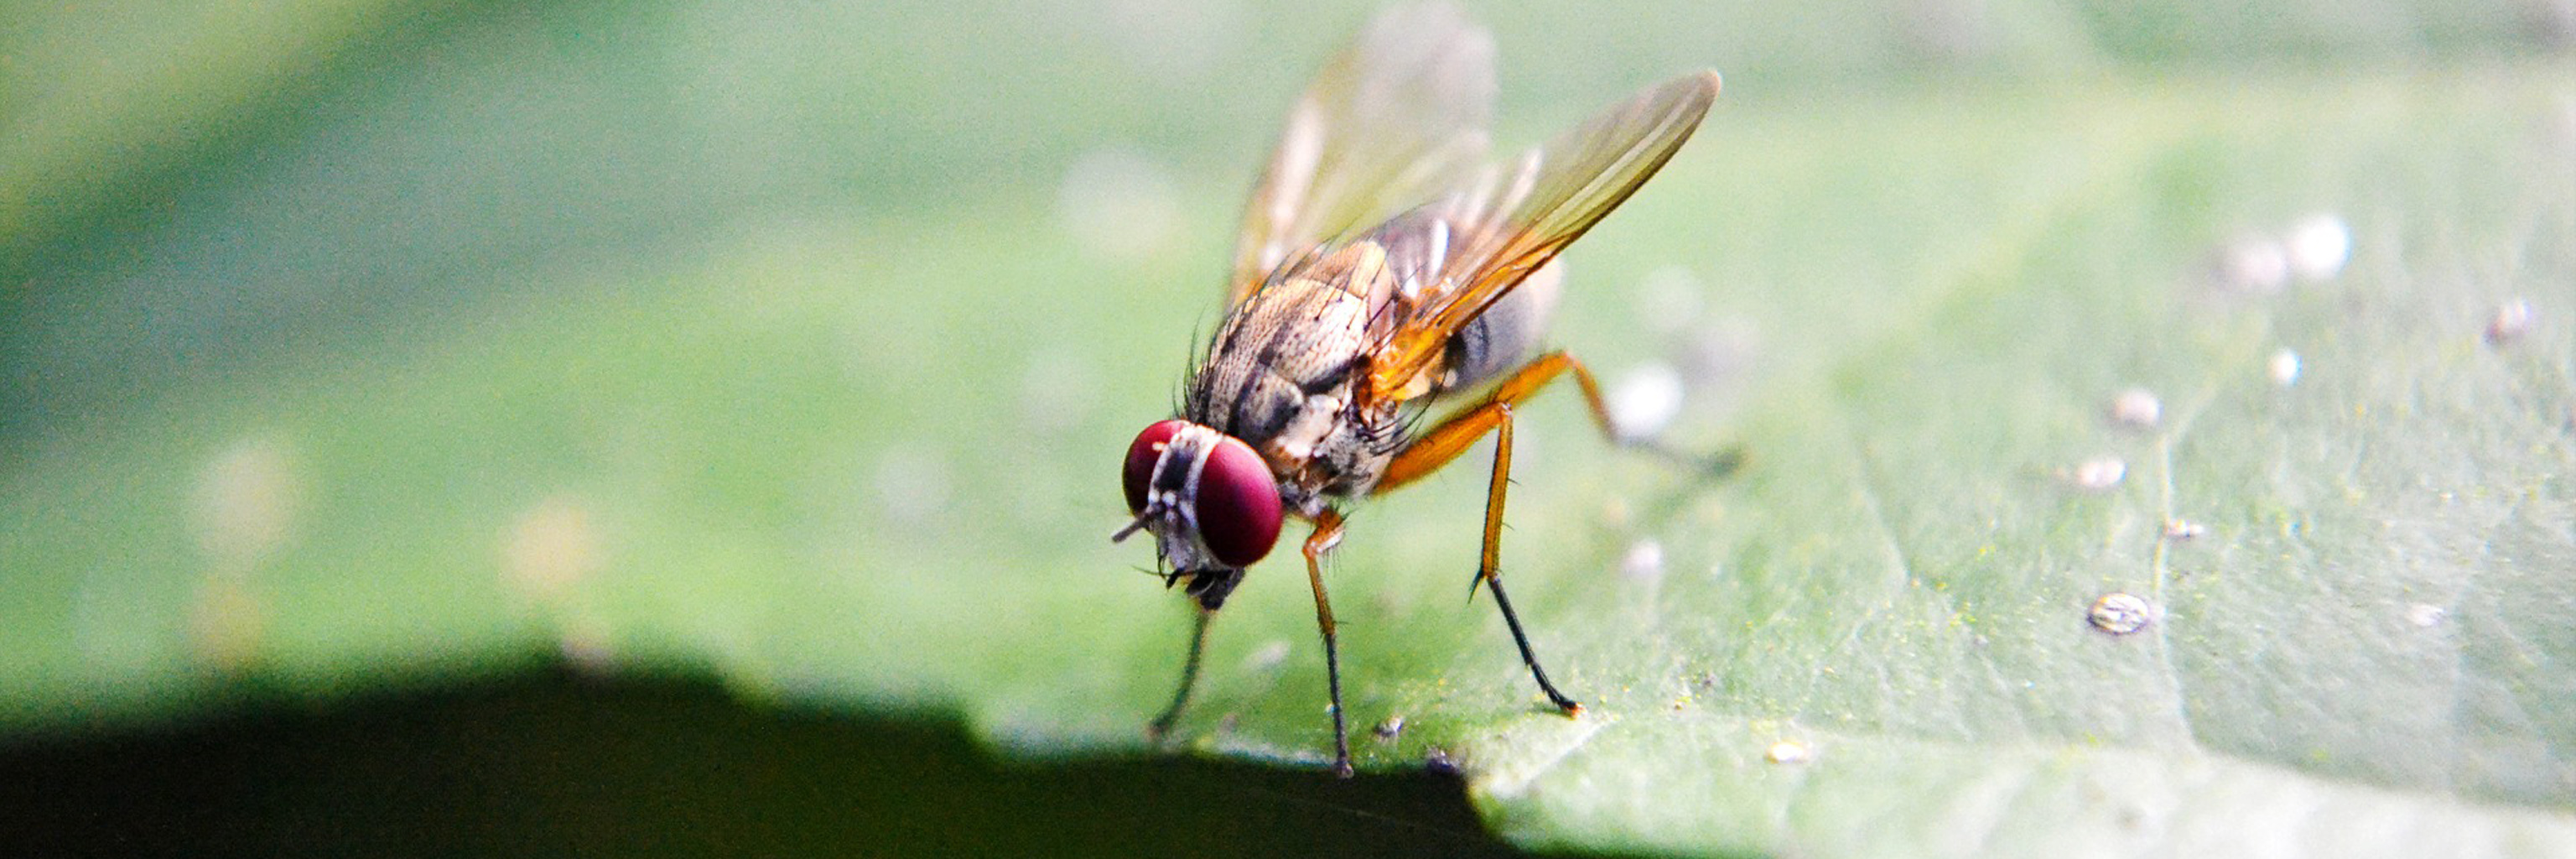 A fruit fly landing